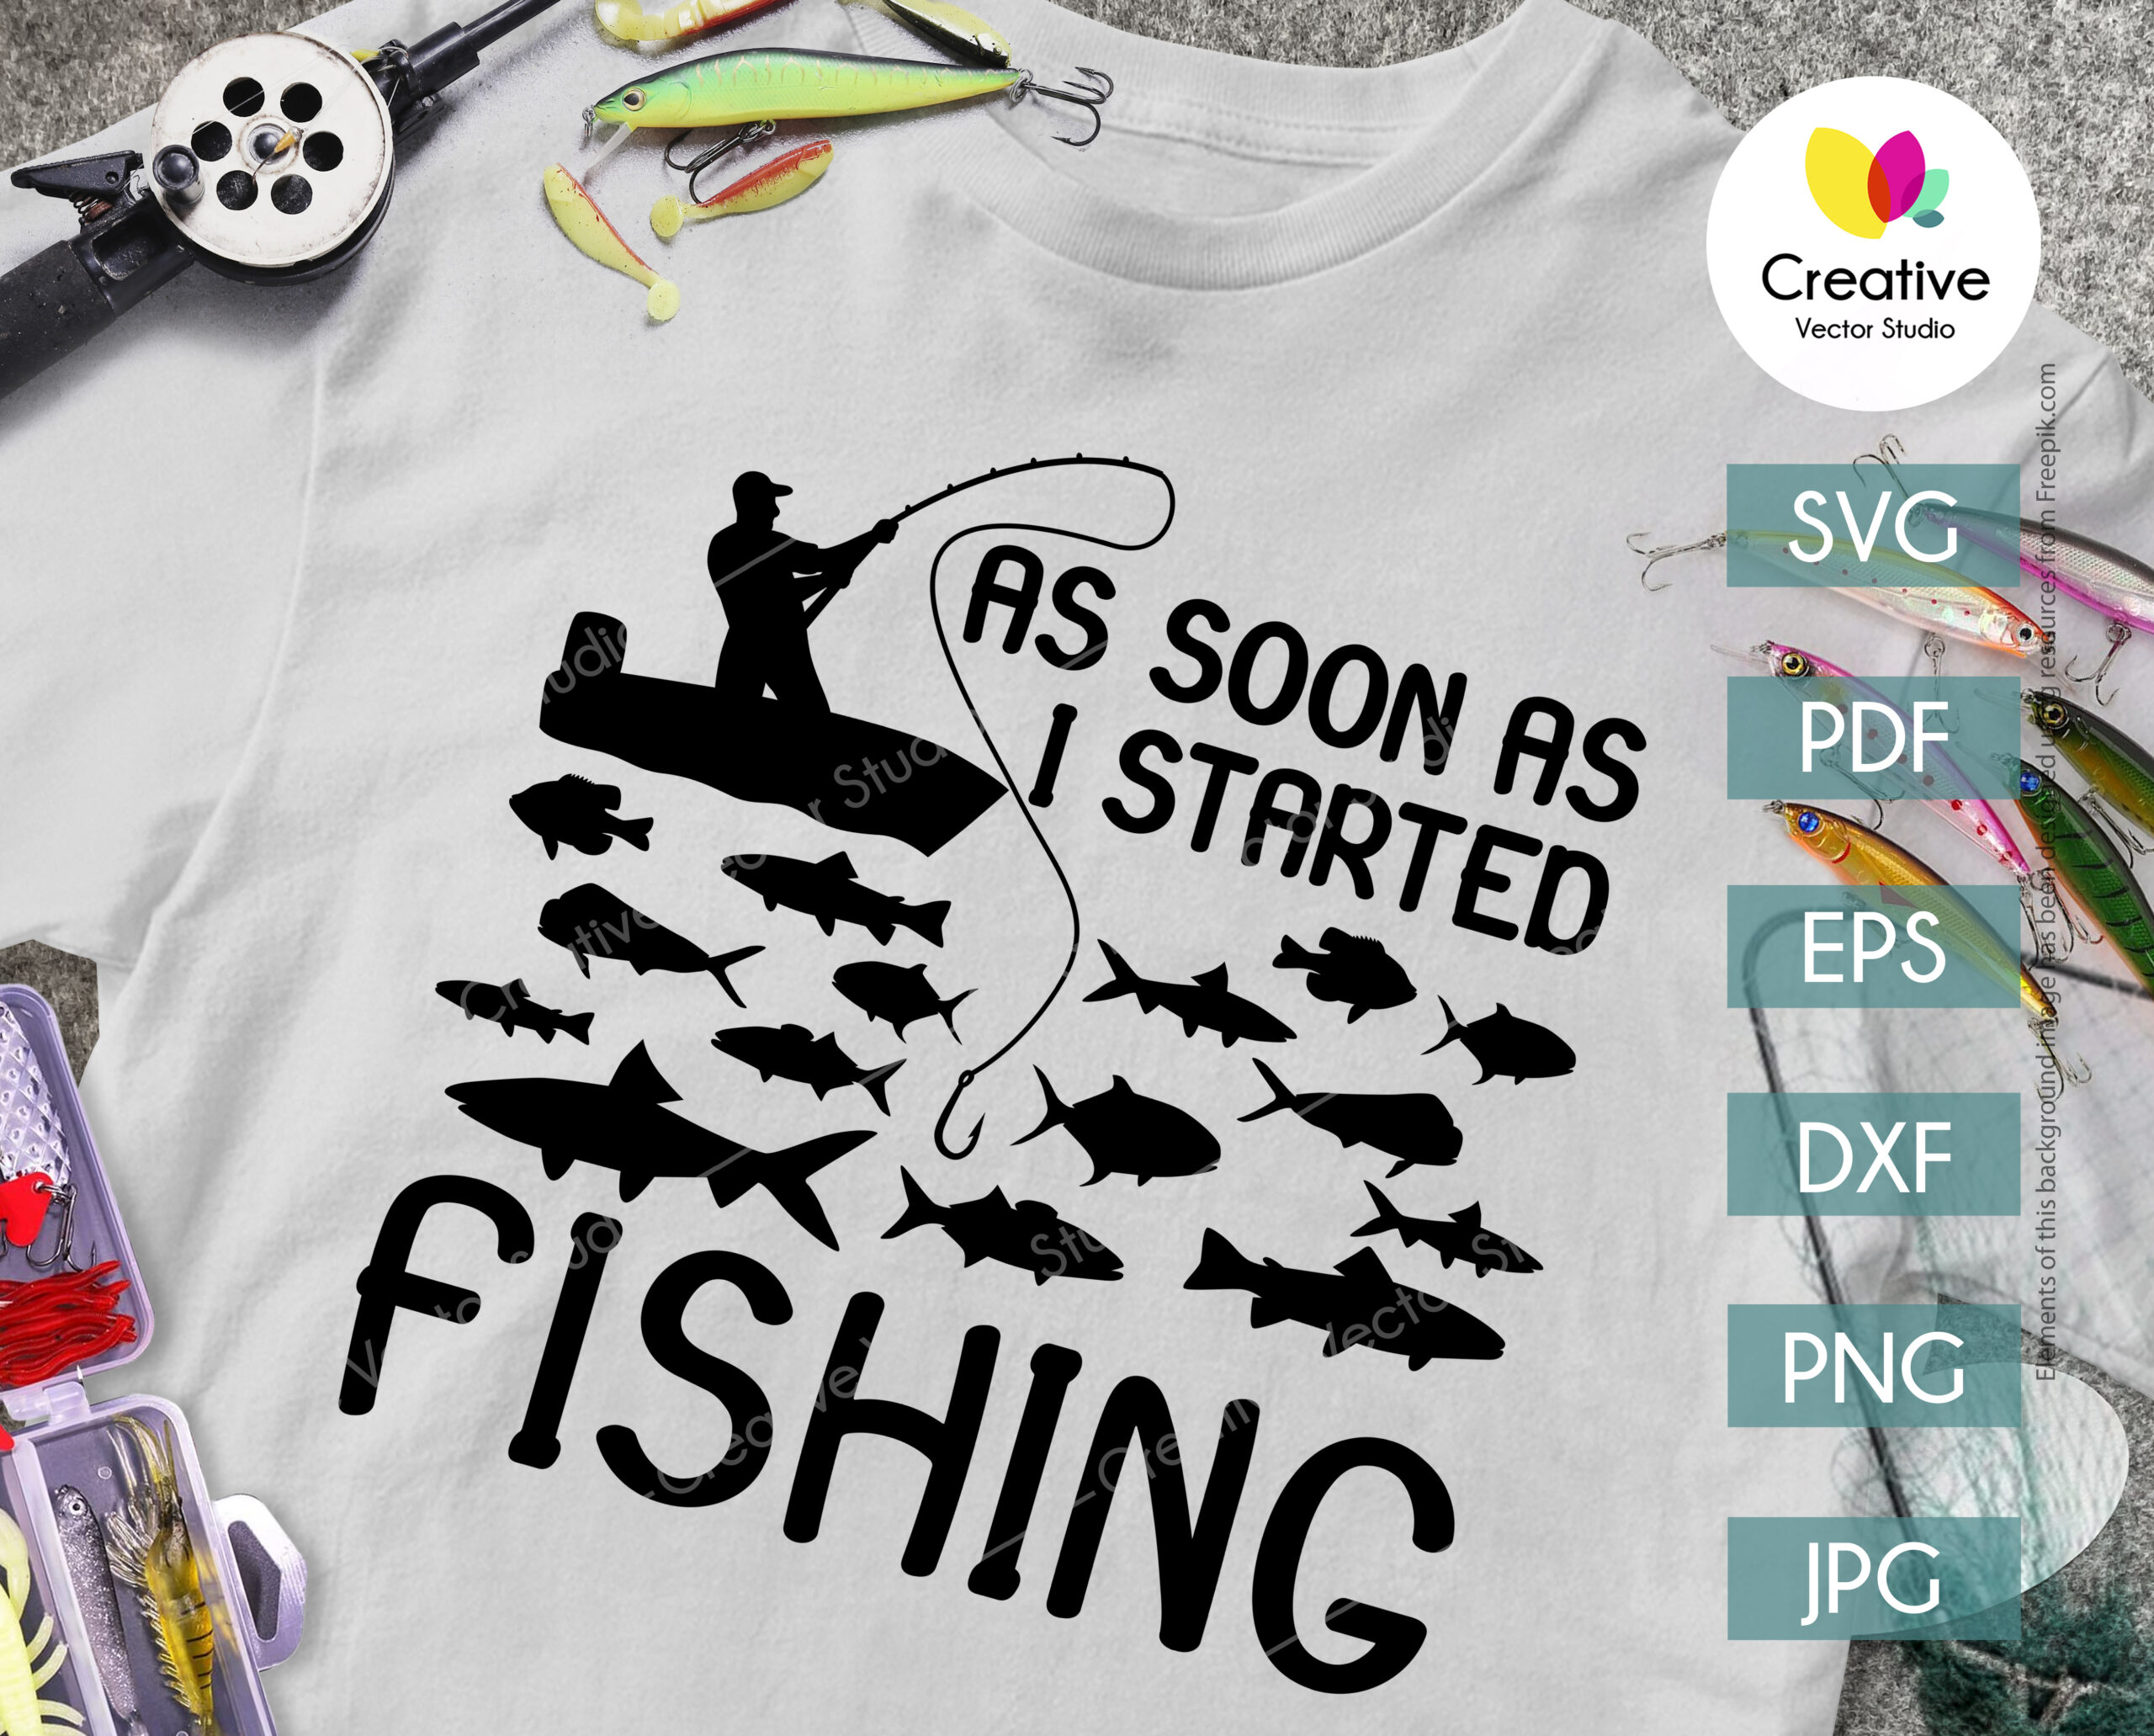 https://creative-vector-studio.com/wp-content/uploads/2021/03/fishing-funny-shirt-scaled.jpg